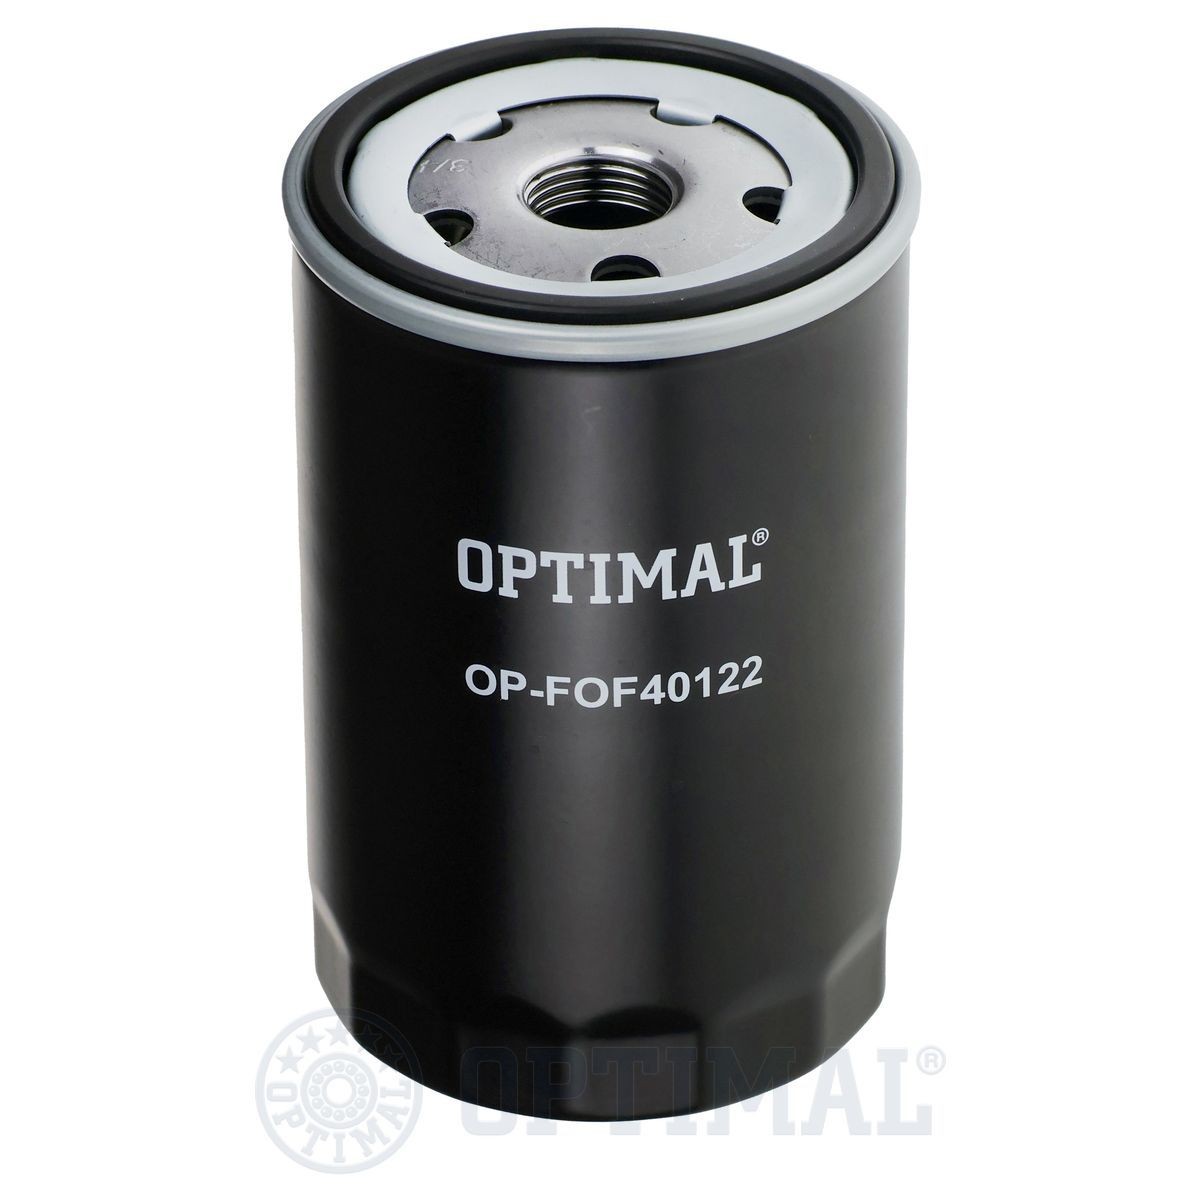 OPTIMAL OP-FOF40122 Oil filter 5012 556